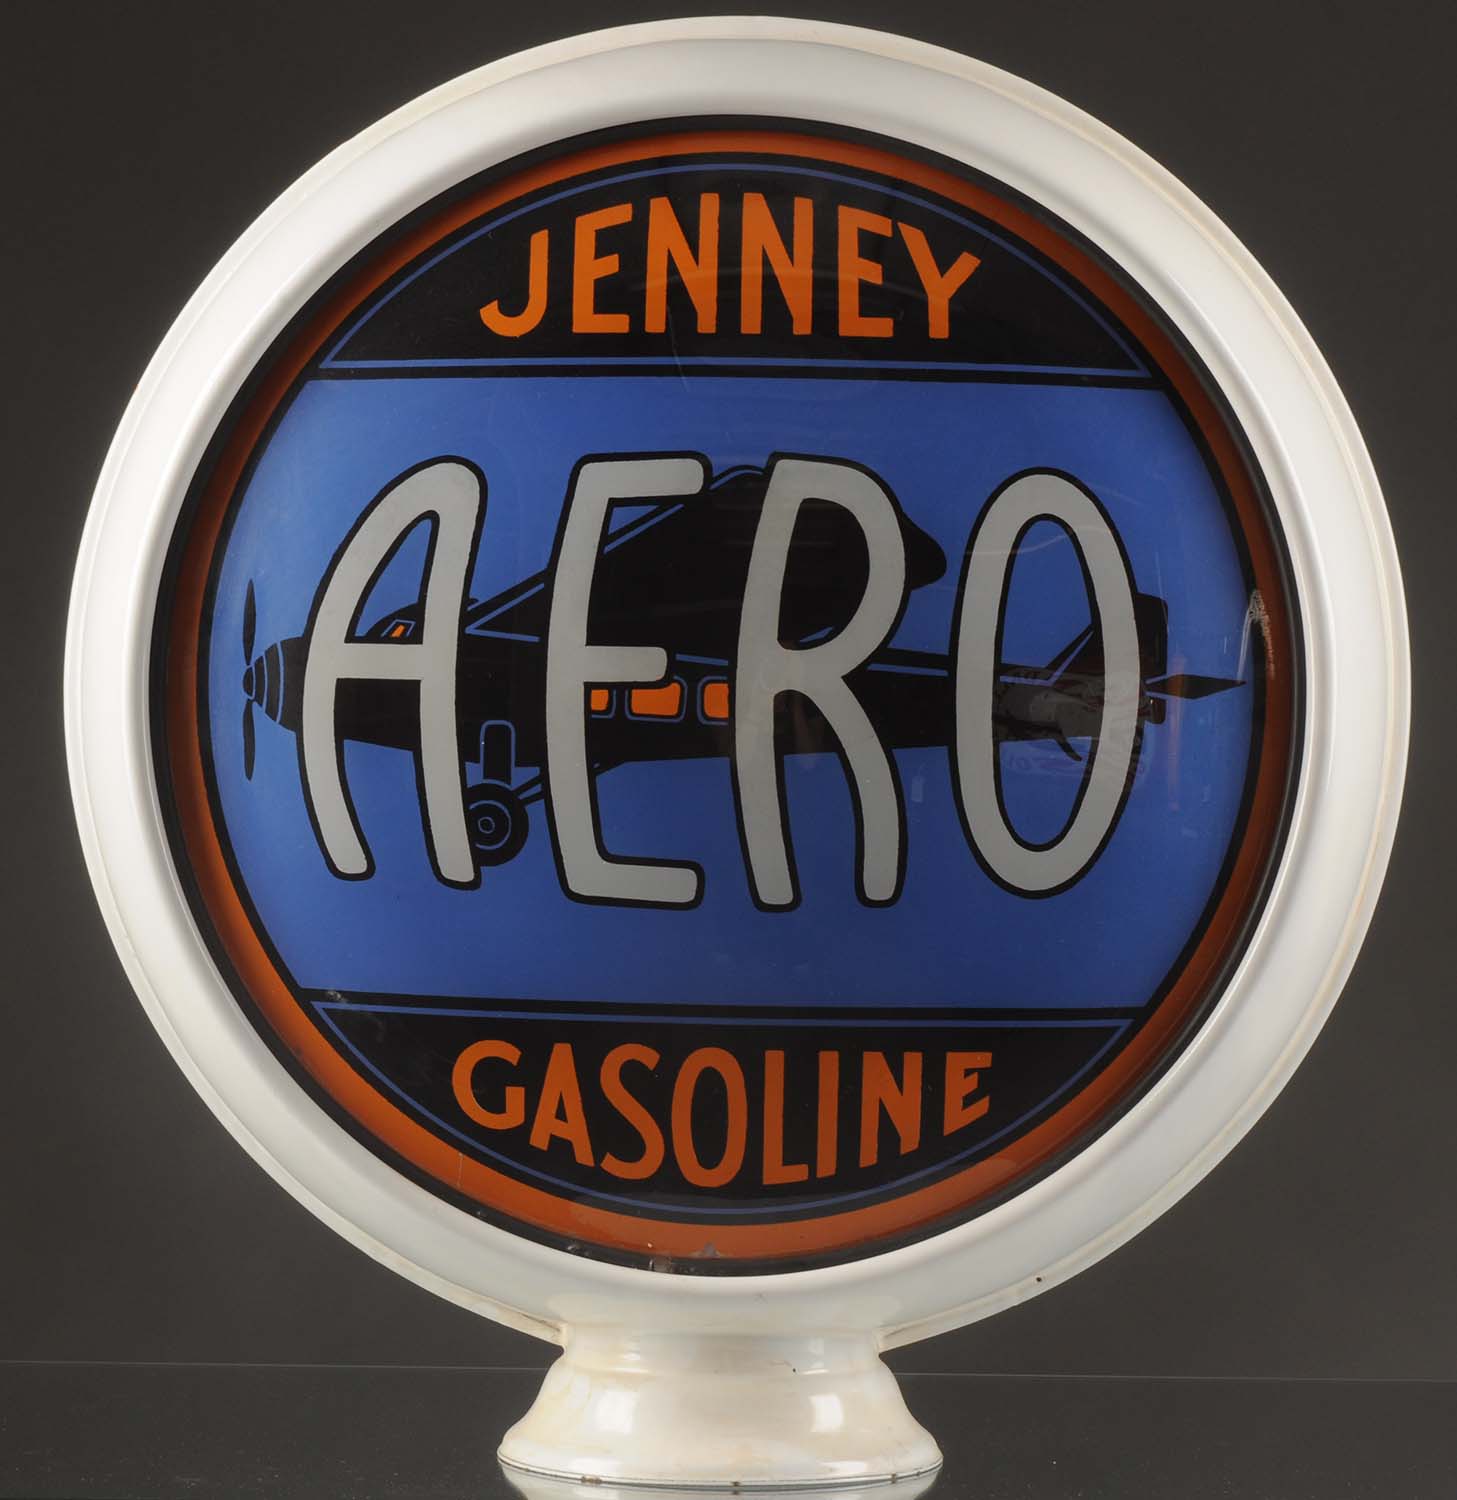 Lot #22, Jenney Aero Gasoline Single Lens, estimated at $15,000-$20,000.